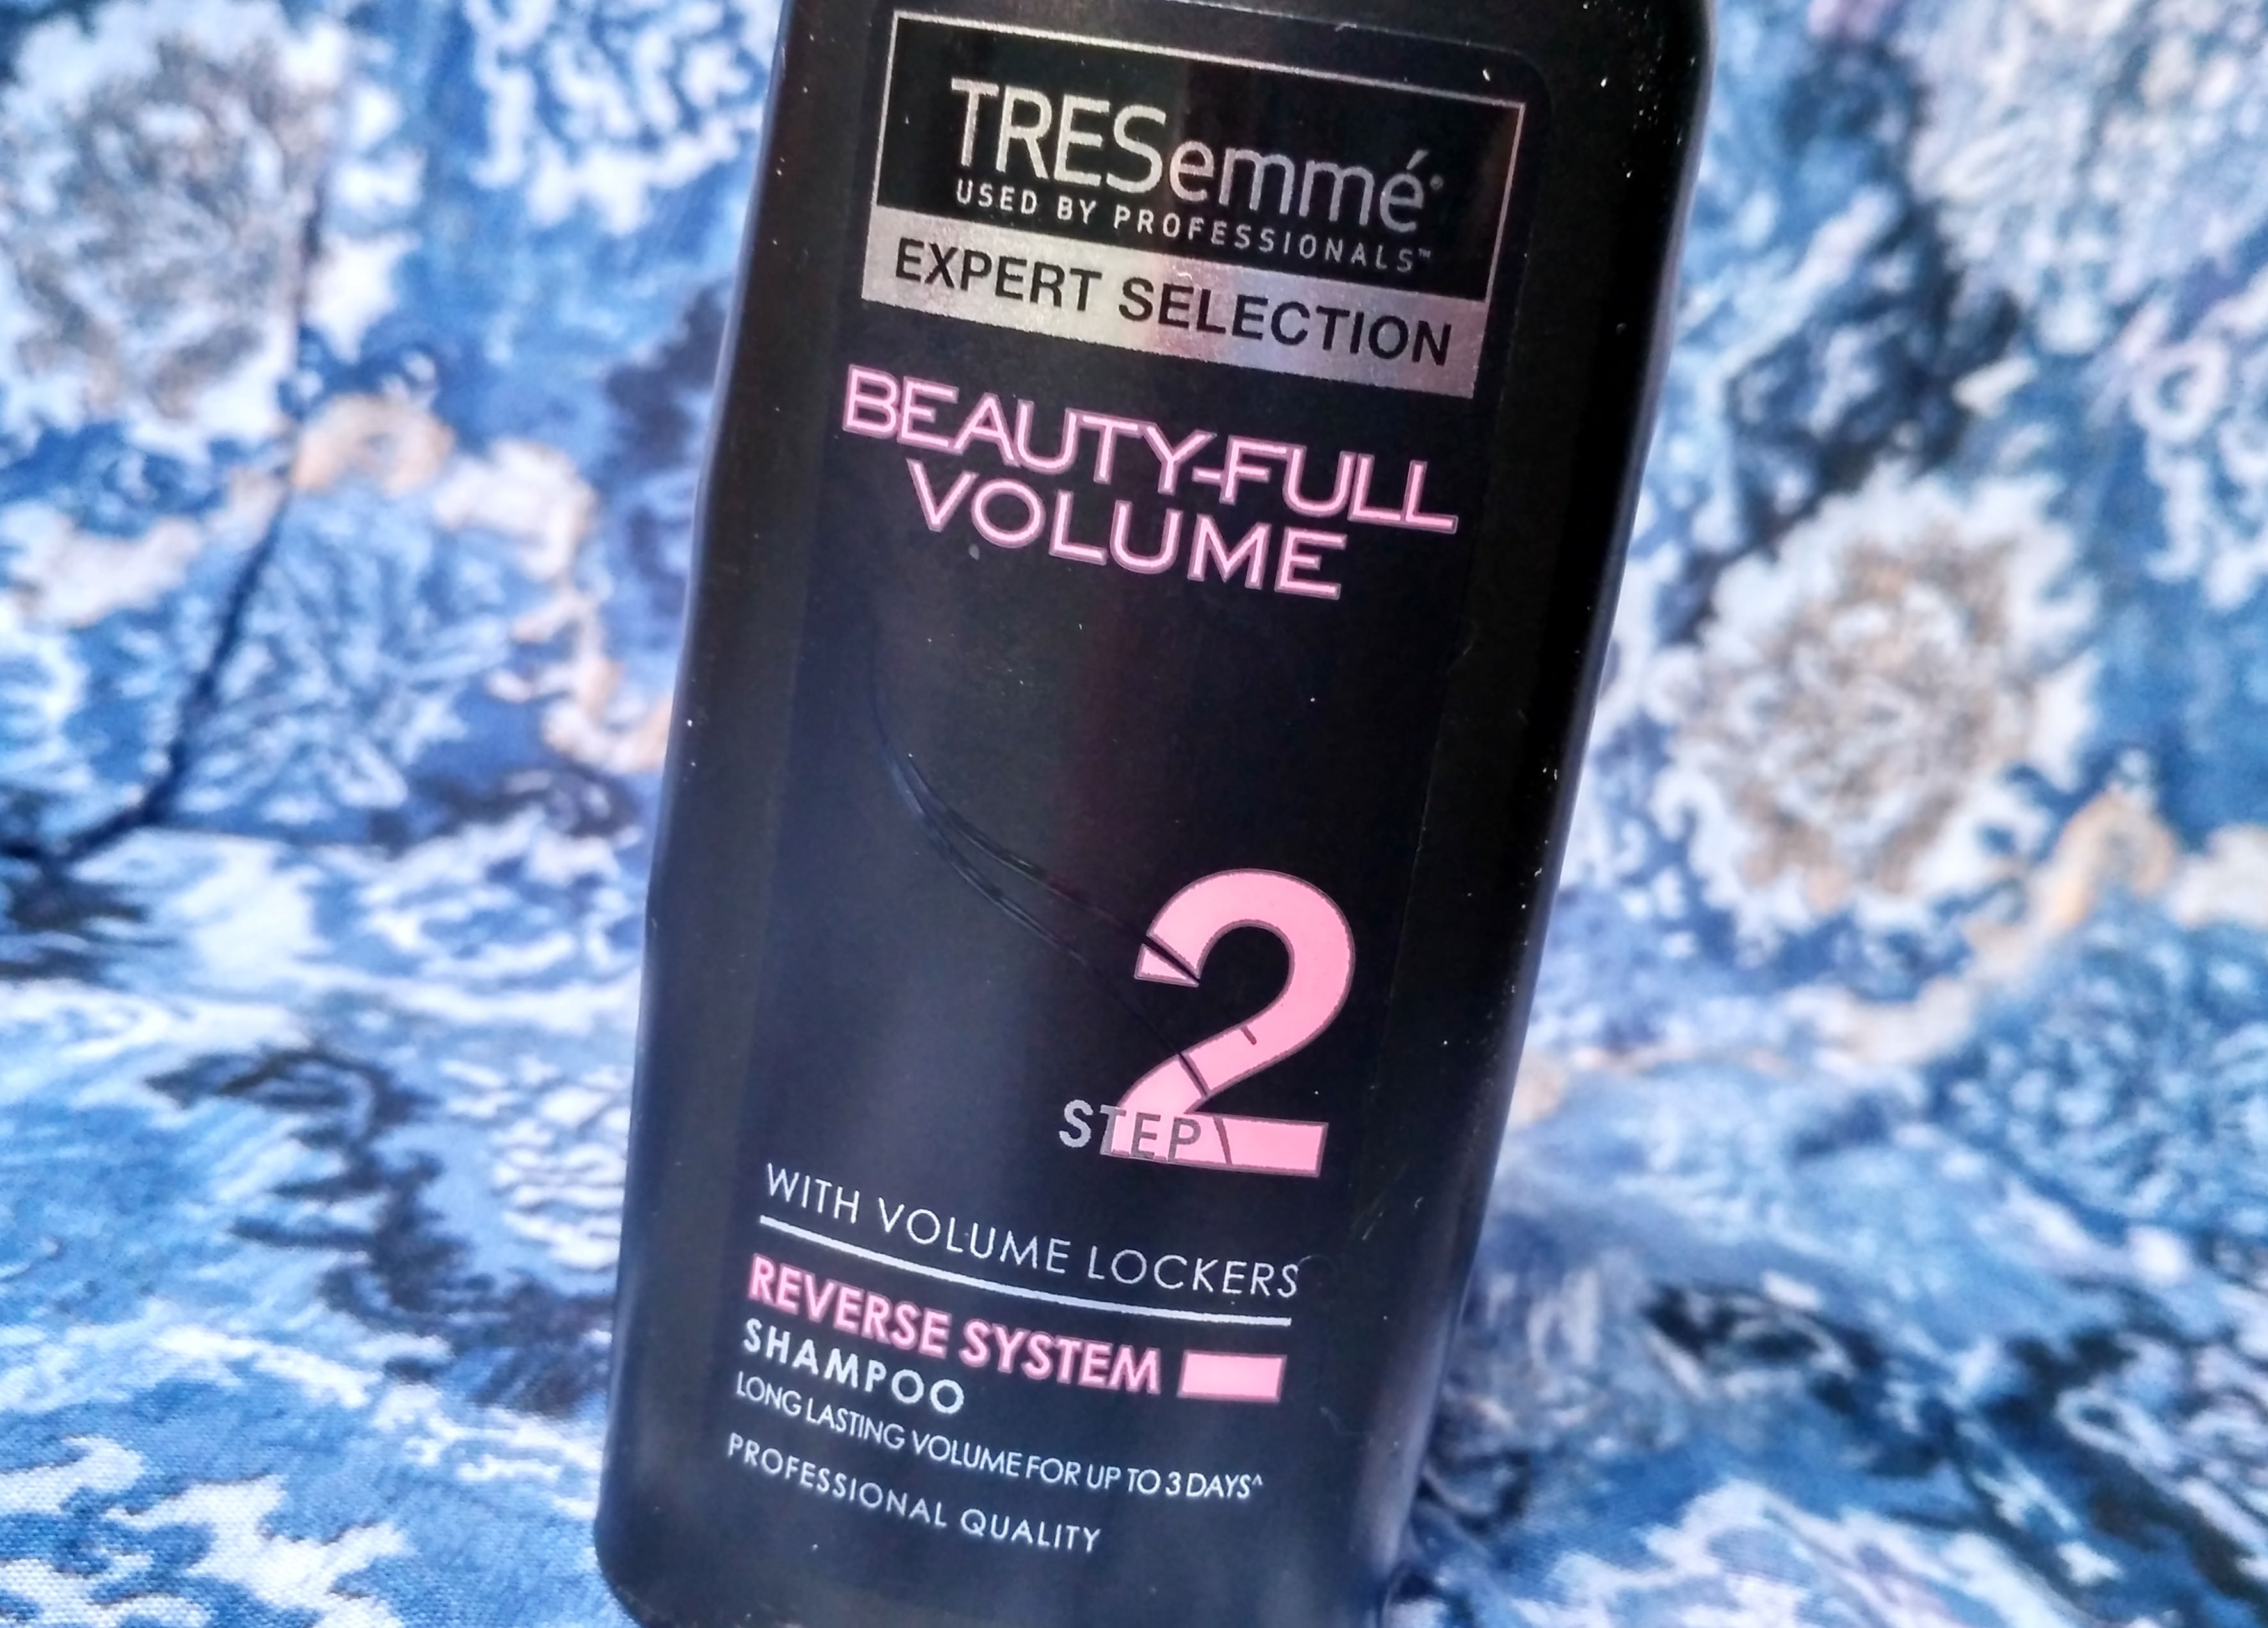 TRESemme Beauty-Full Volume Shampoo Review